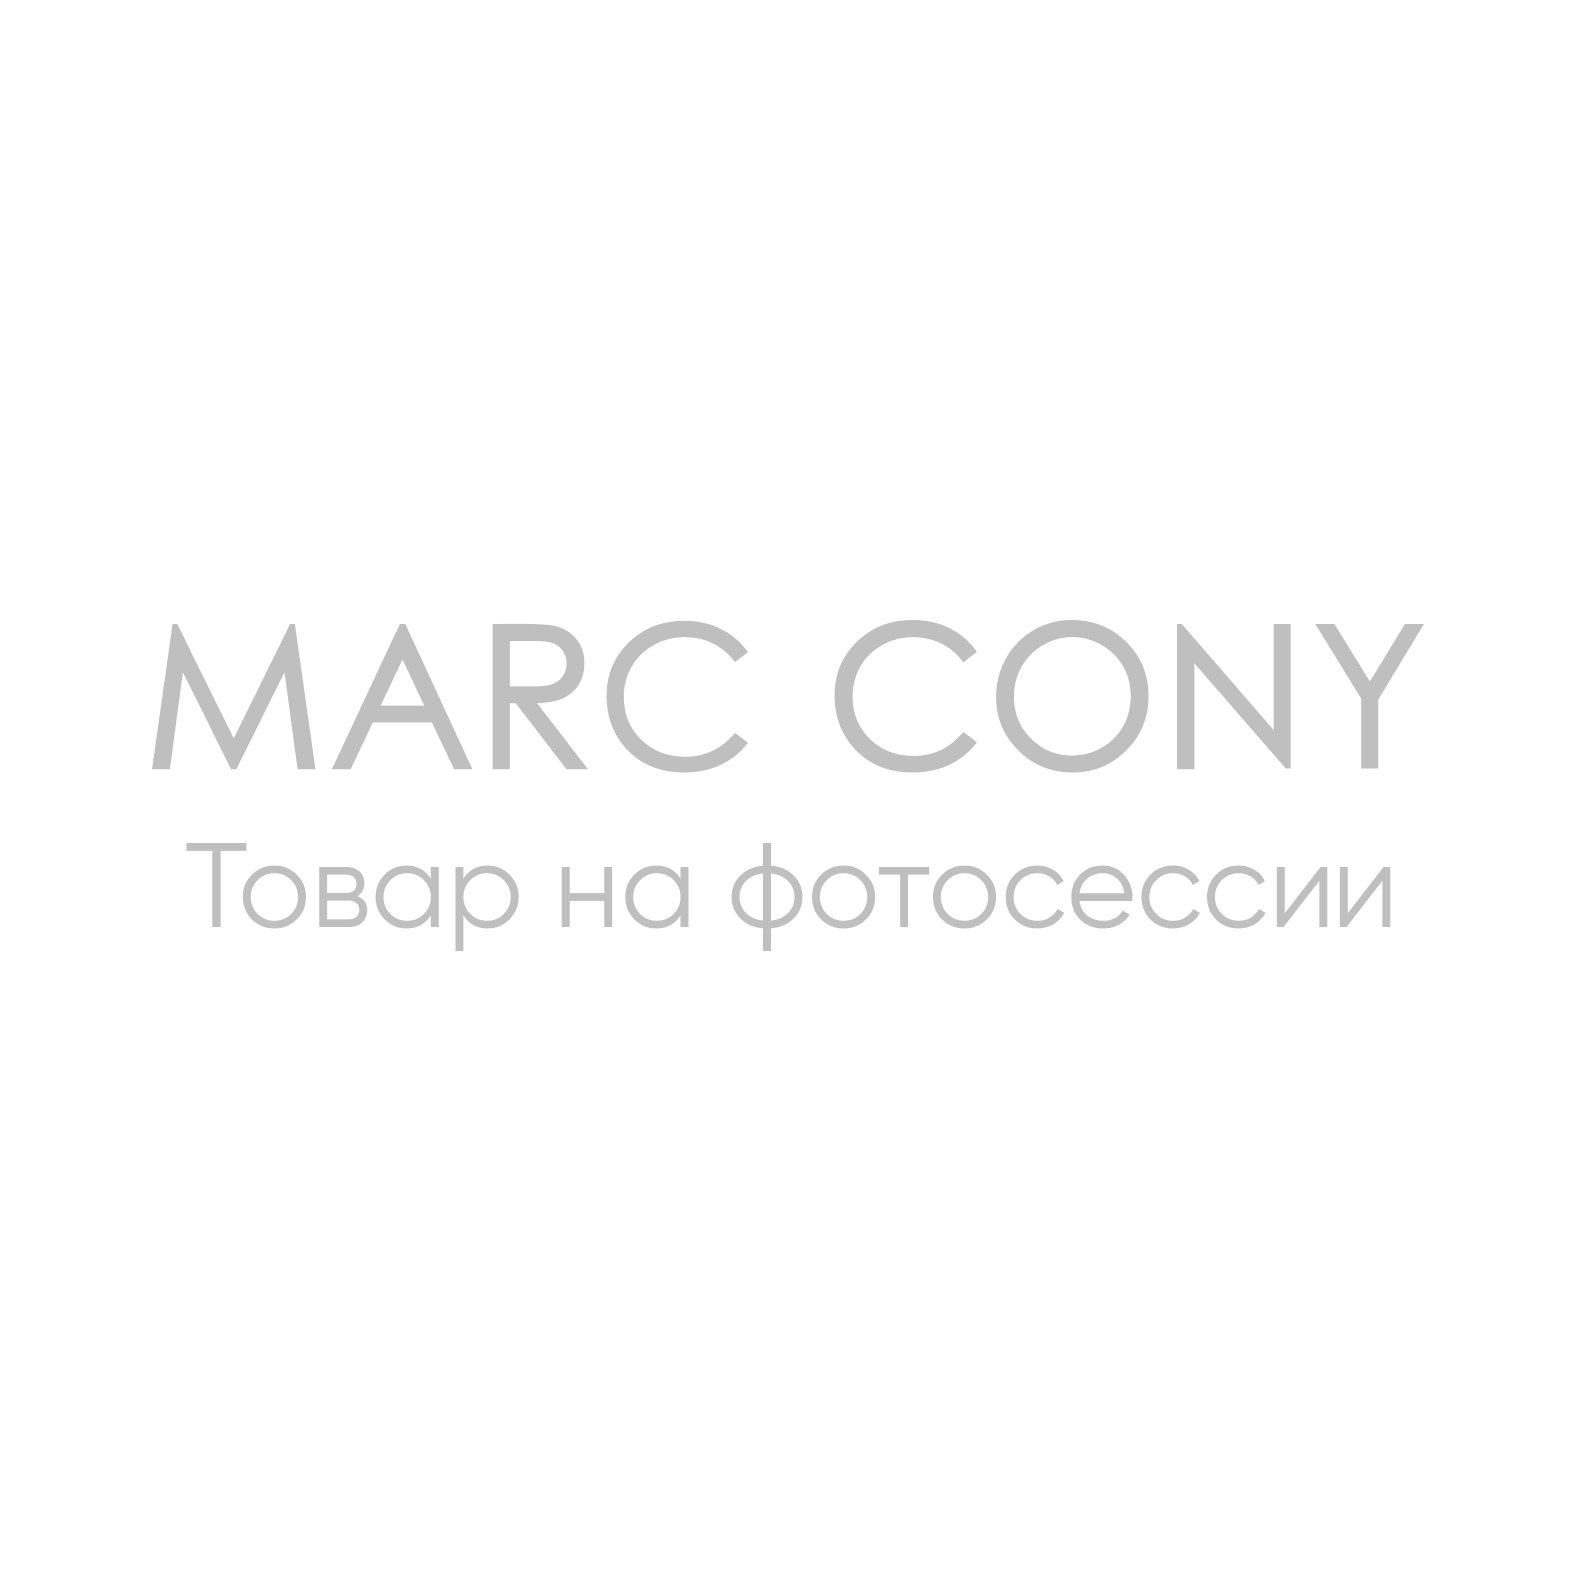 Кроссовки Marc Cony